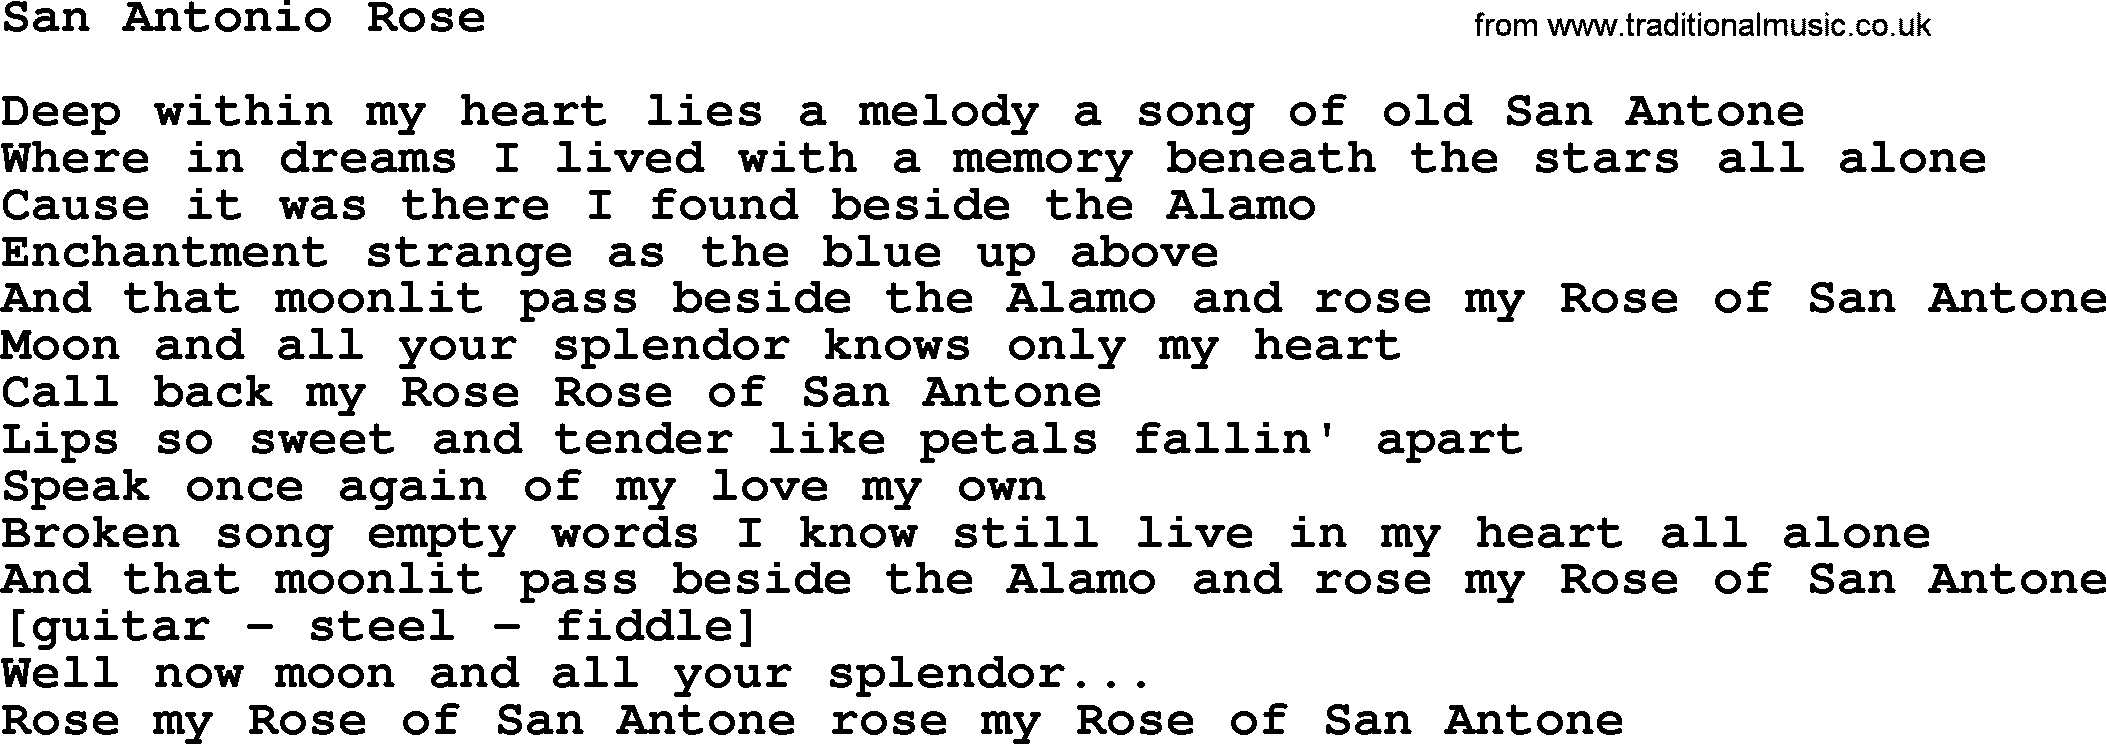 Willie Nelson song: San Antonio Rose lyrics